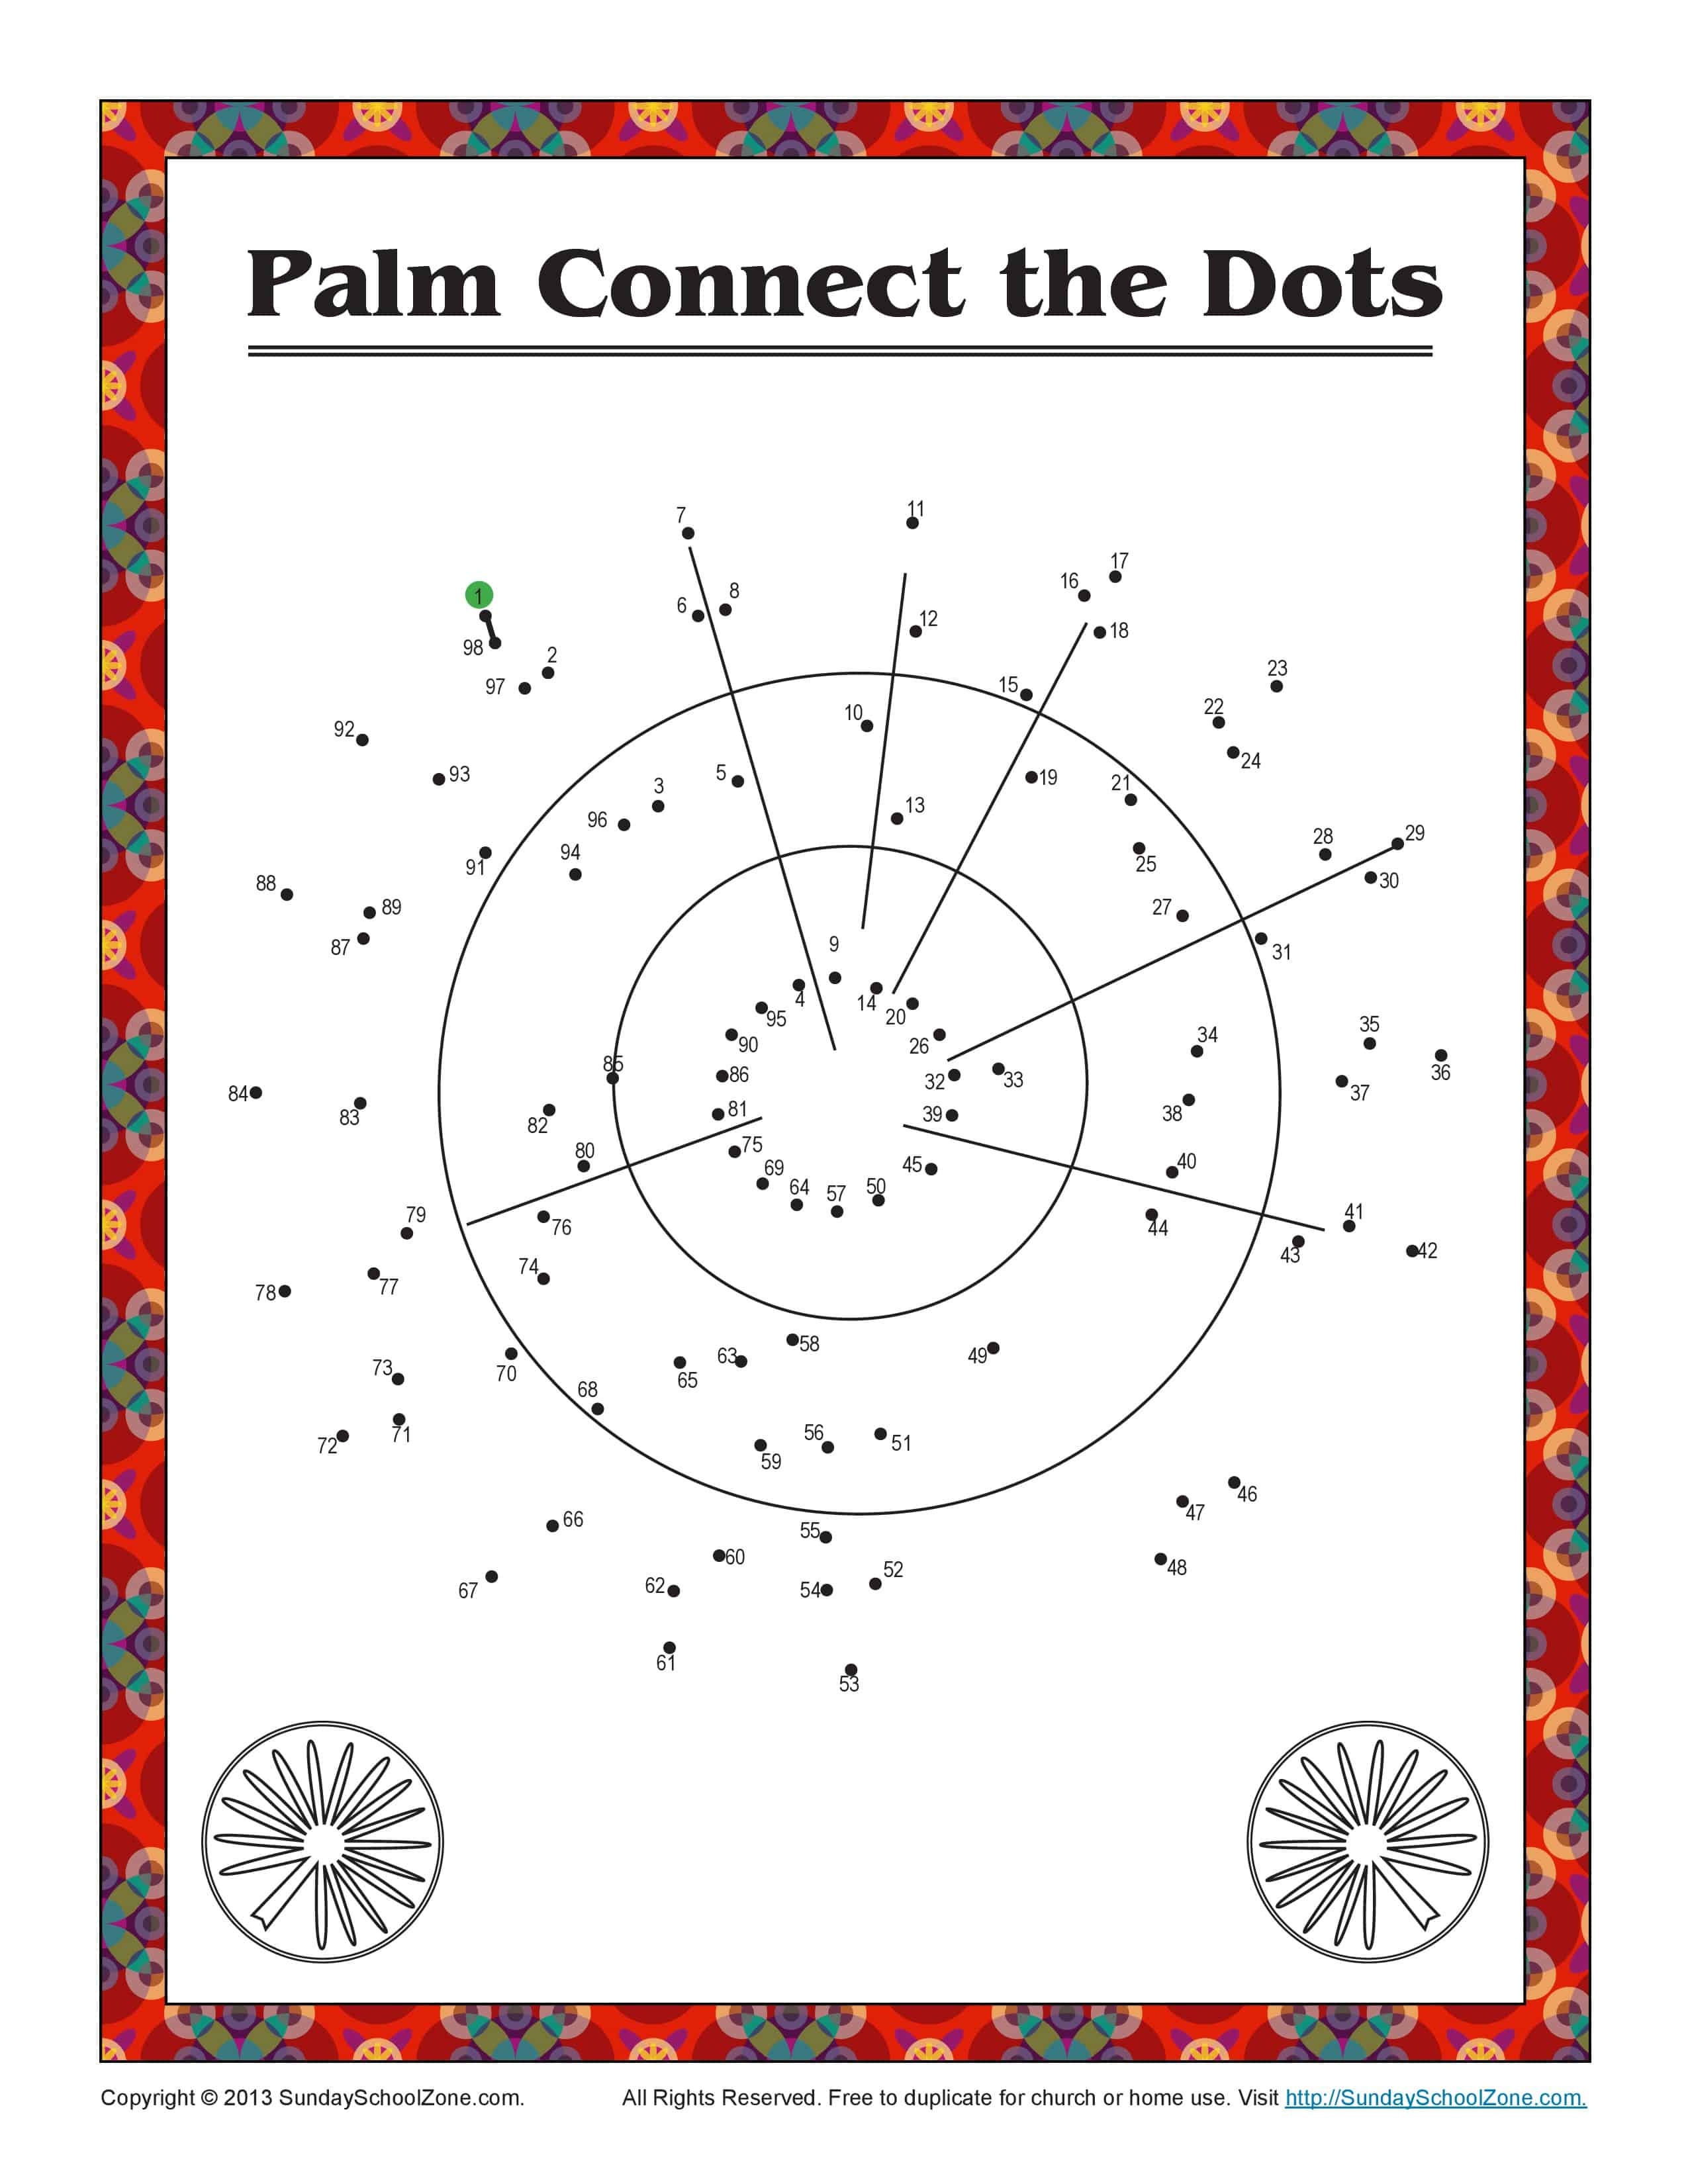 connect dots palm sunday activity triumphal entry bible jesus activities jerusalem children crafts lesson craft lessons sundayschoolzone story stories donkey